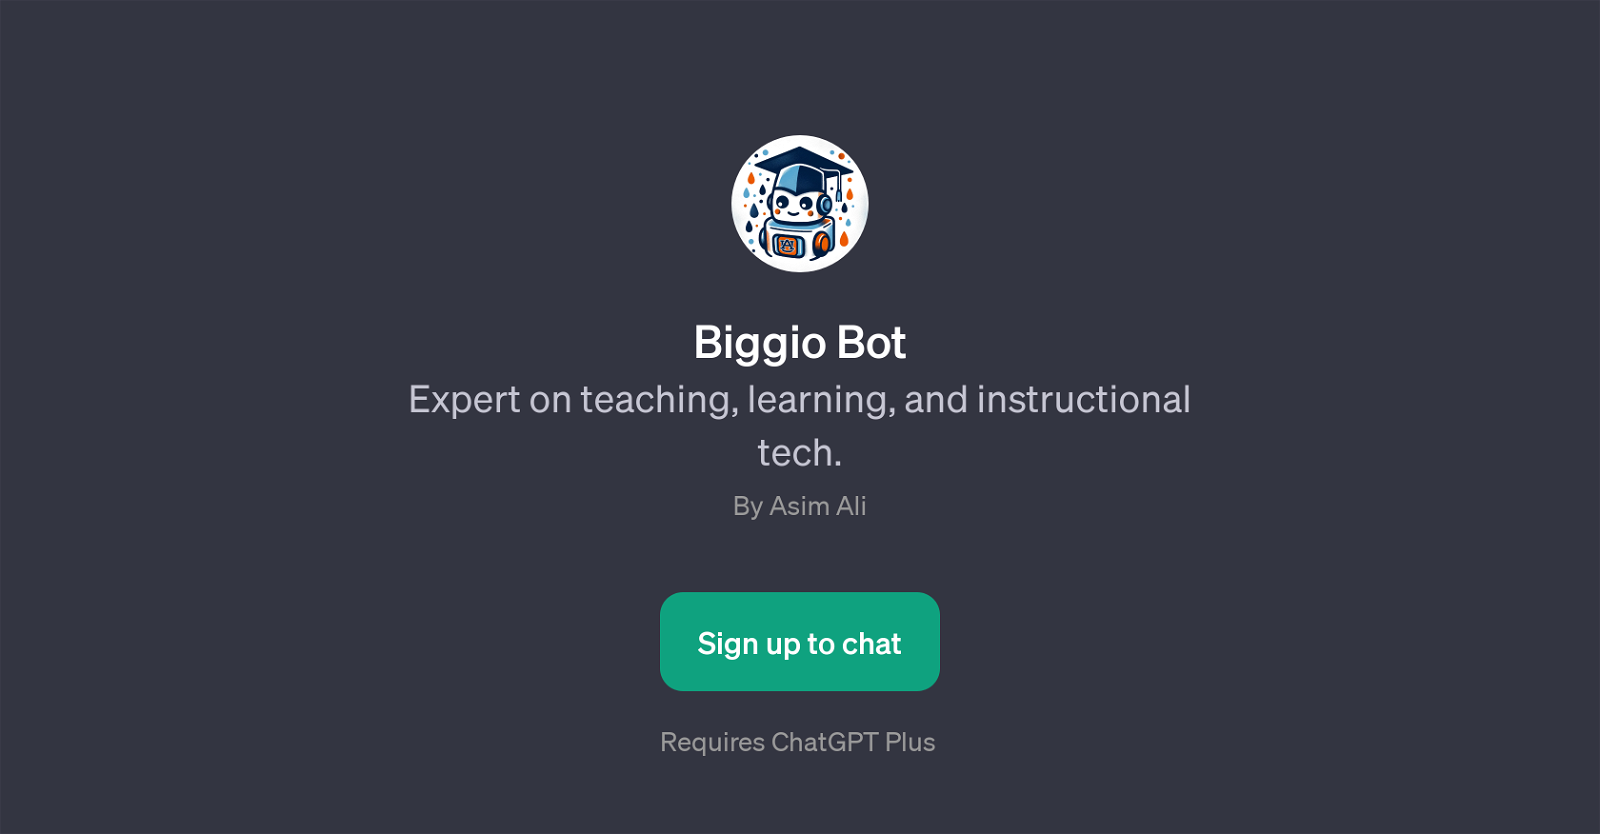 Biggio Bot website